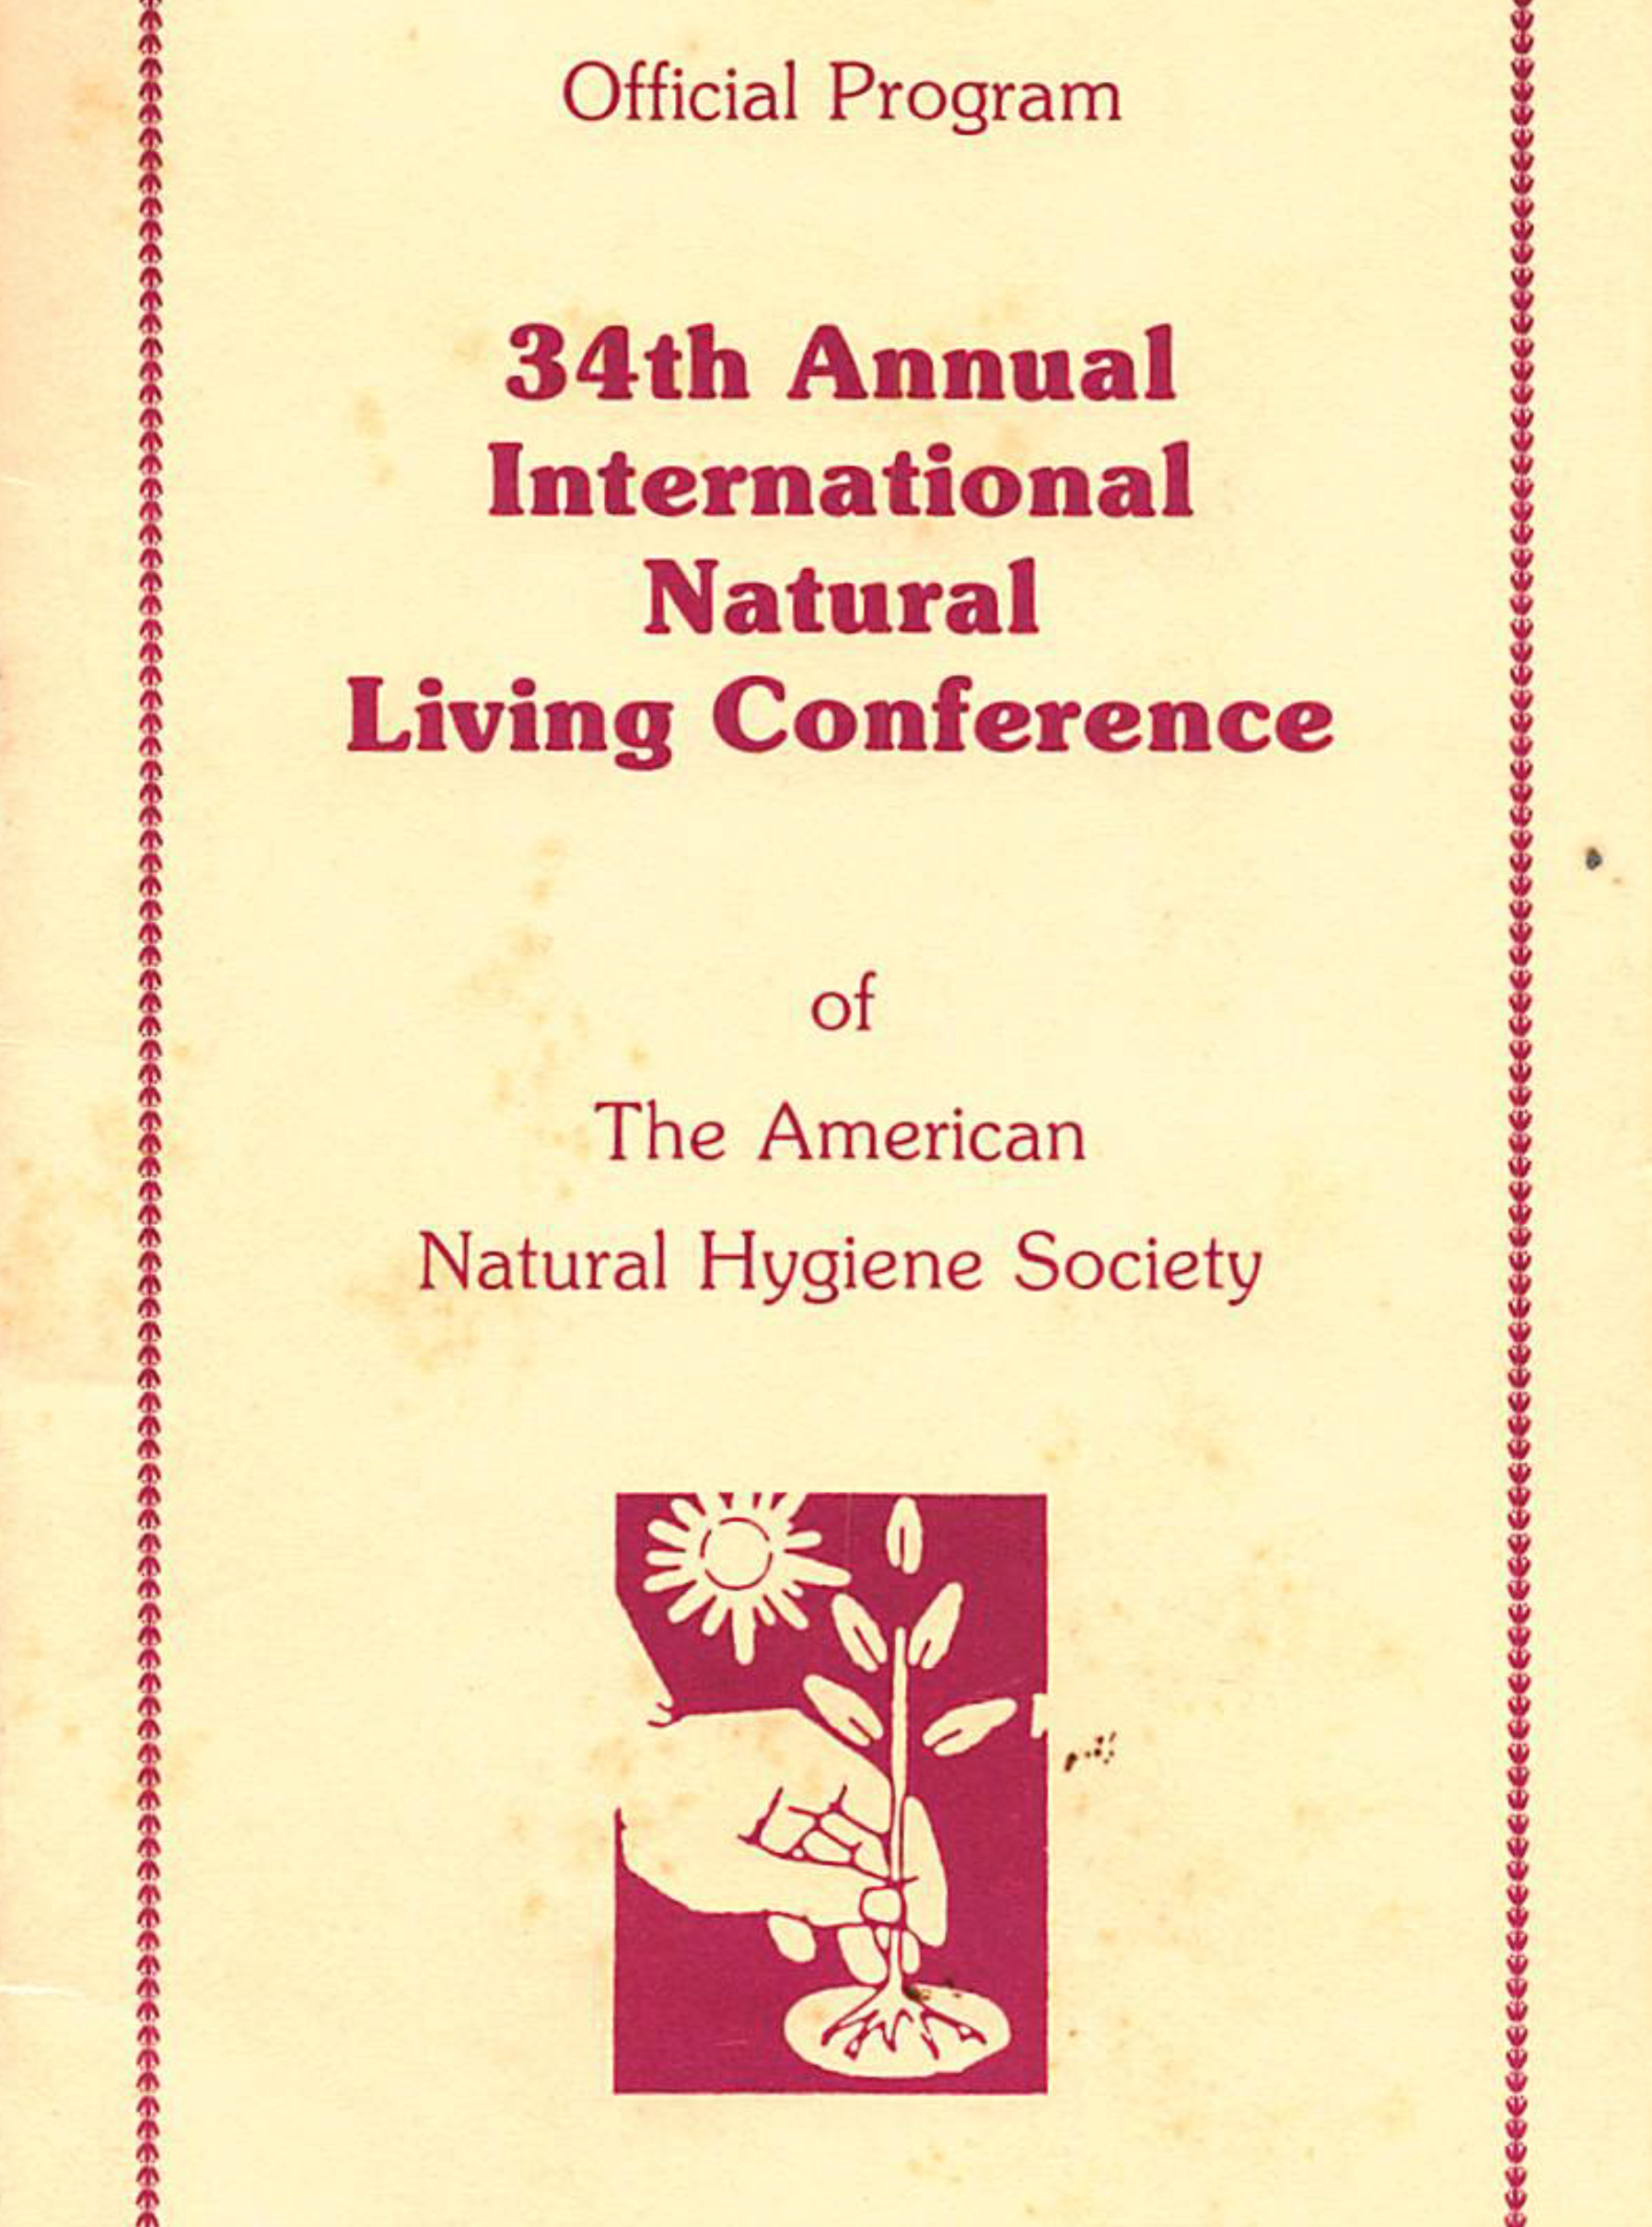 Conference Program. Bridgeport, 1982